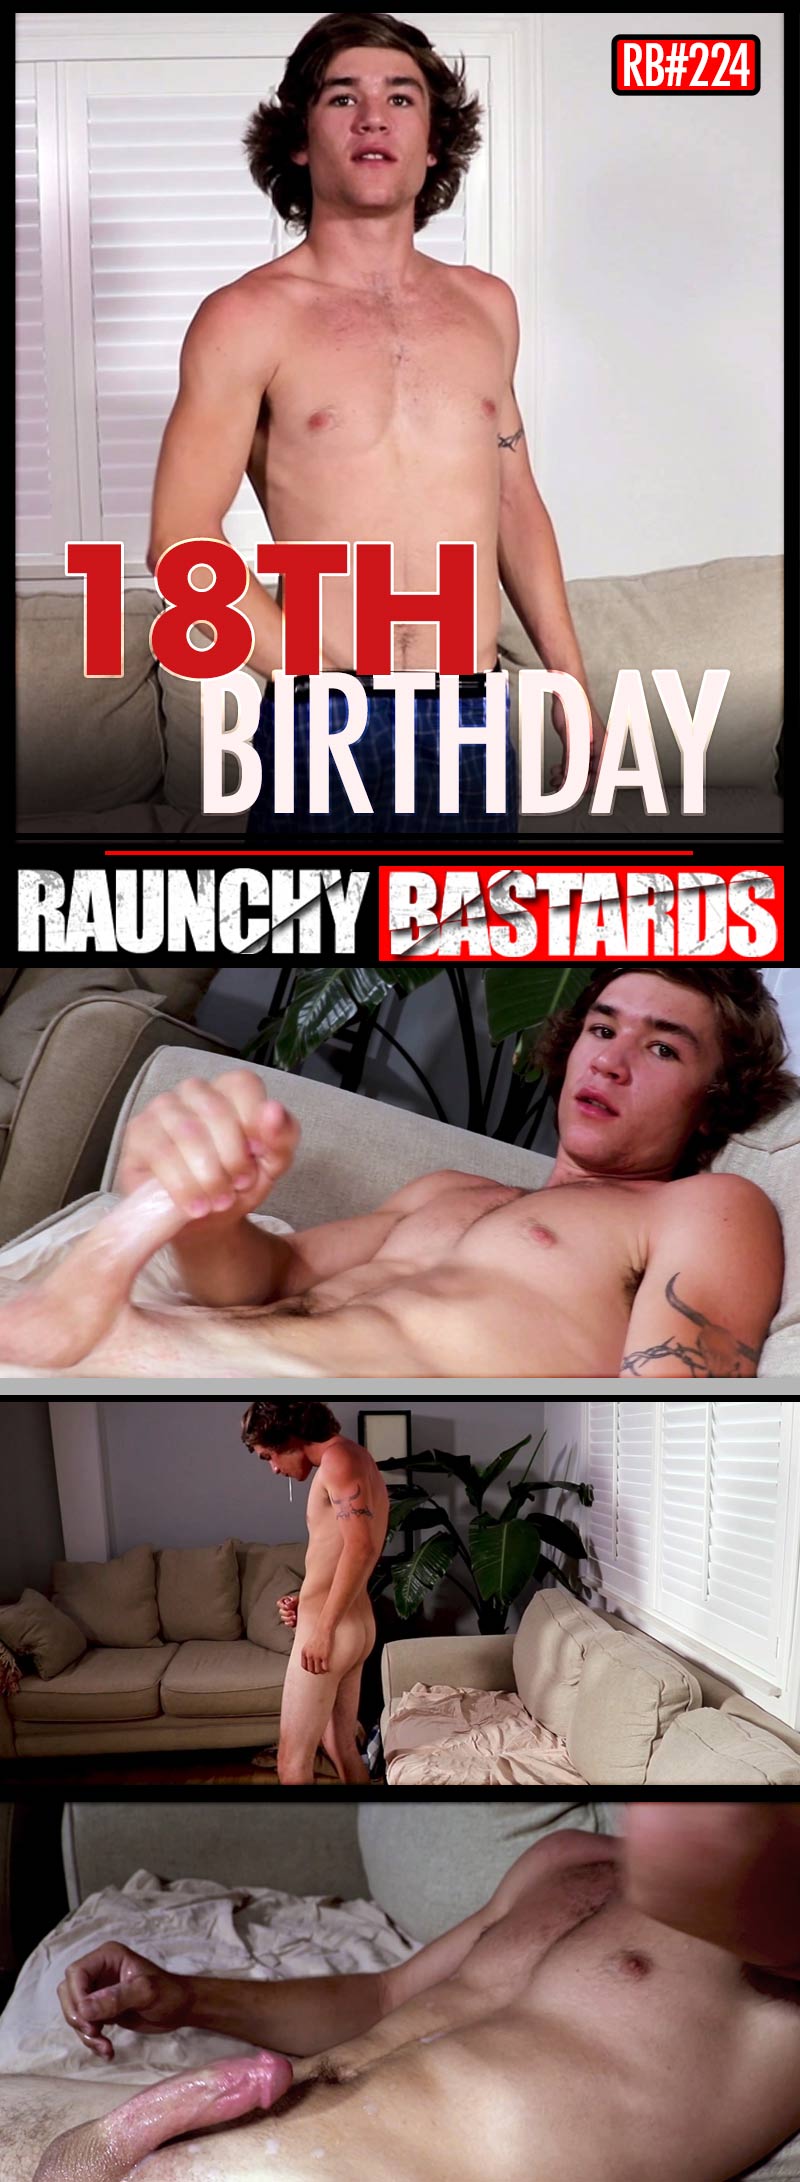 Episode #224: Landon Matthews' 18th Birthday at Raunch Bastards